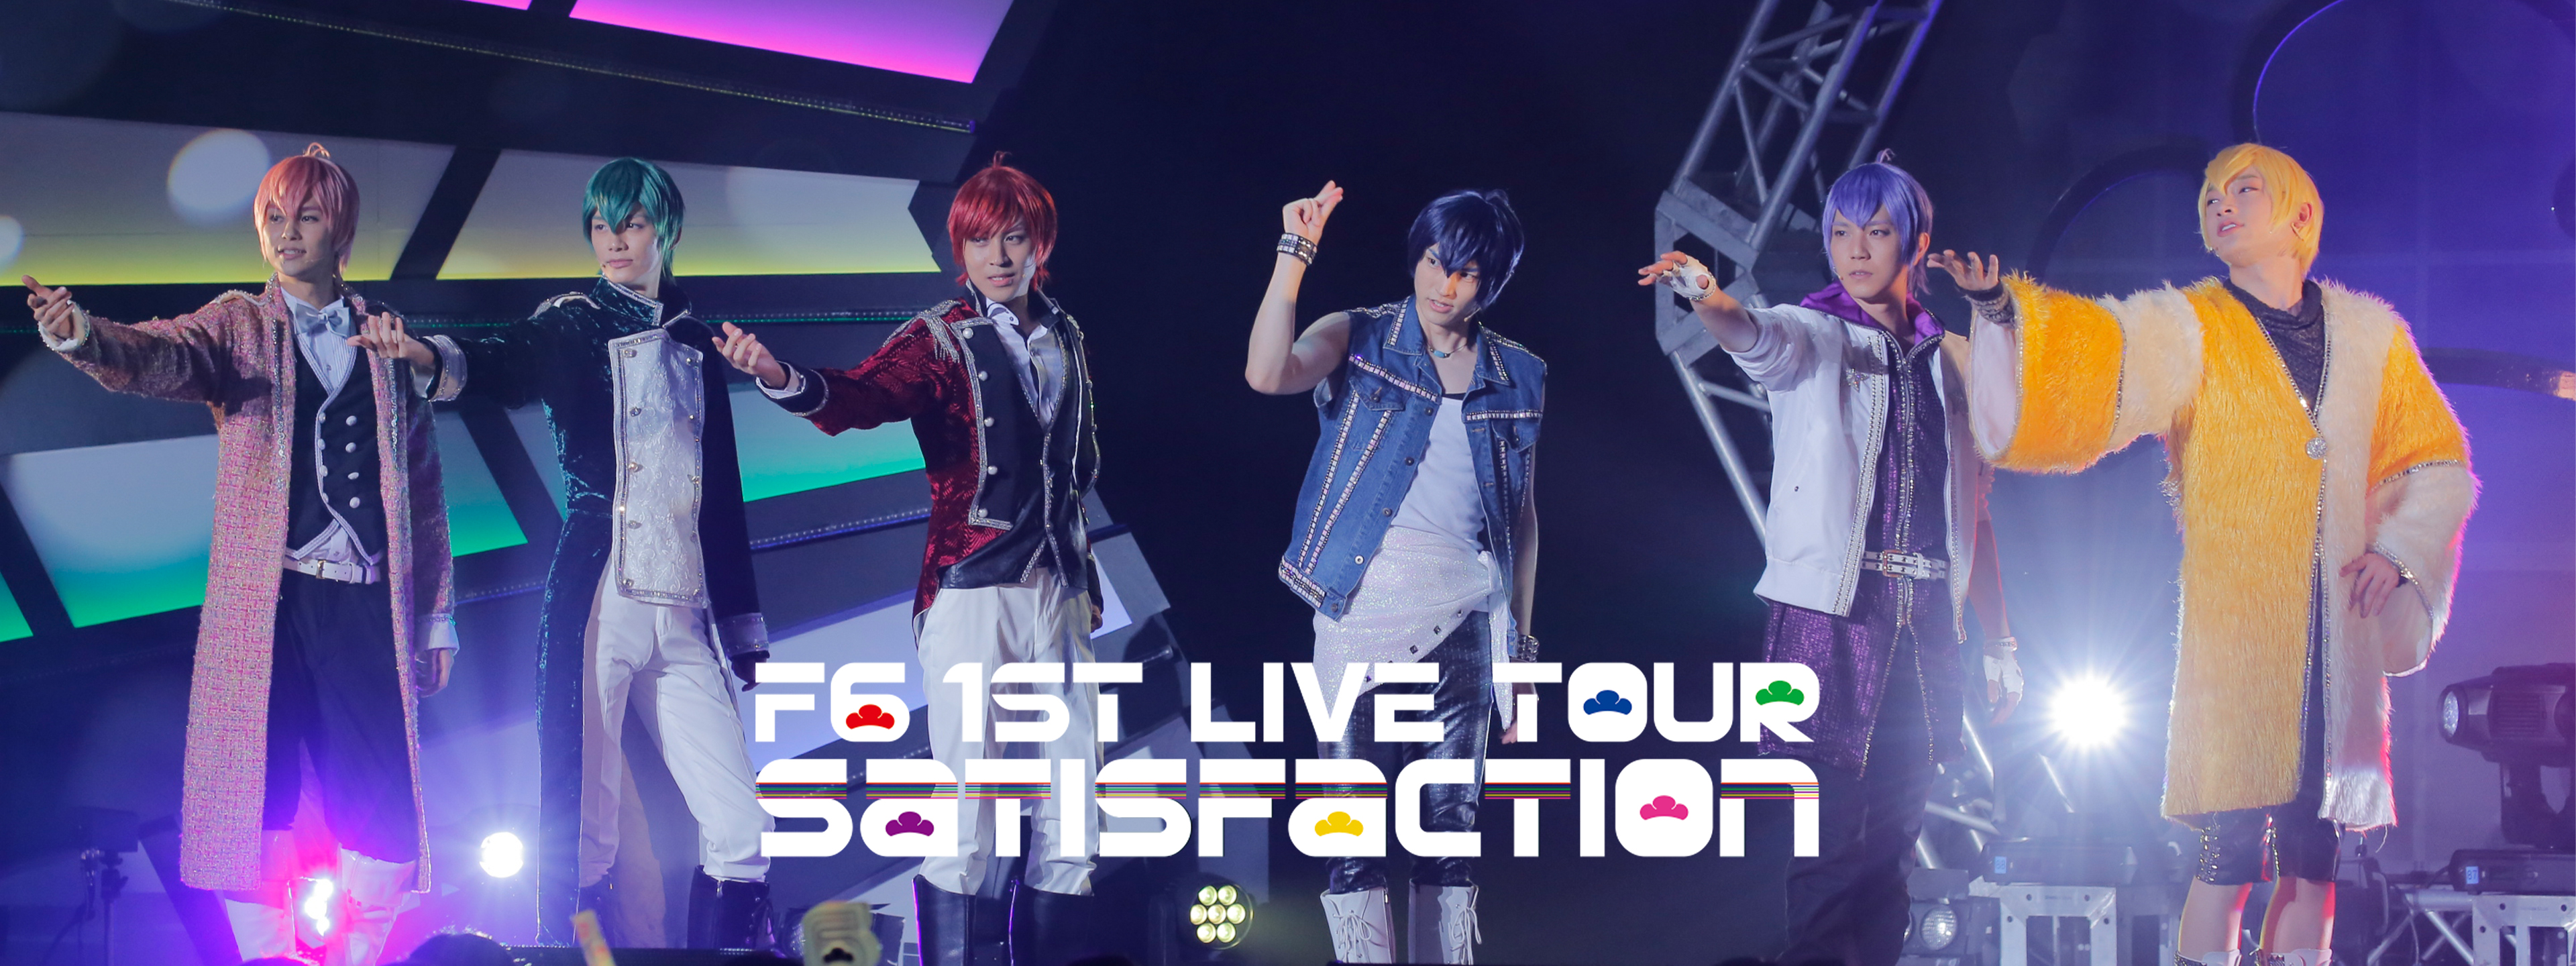 F6 1st LIVEツアー「Satisfaction」 | Hulu(フールー)